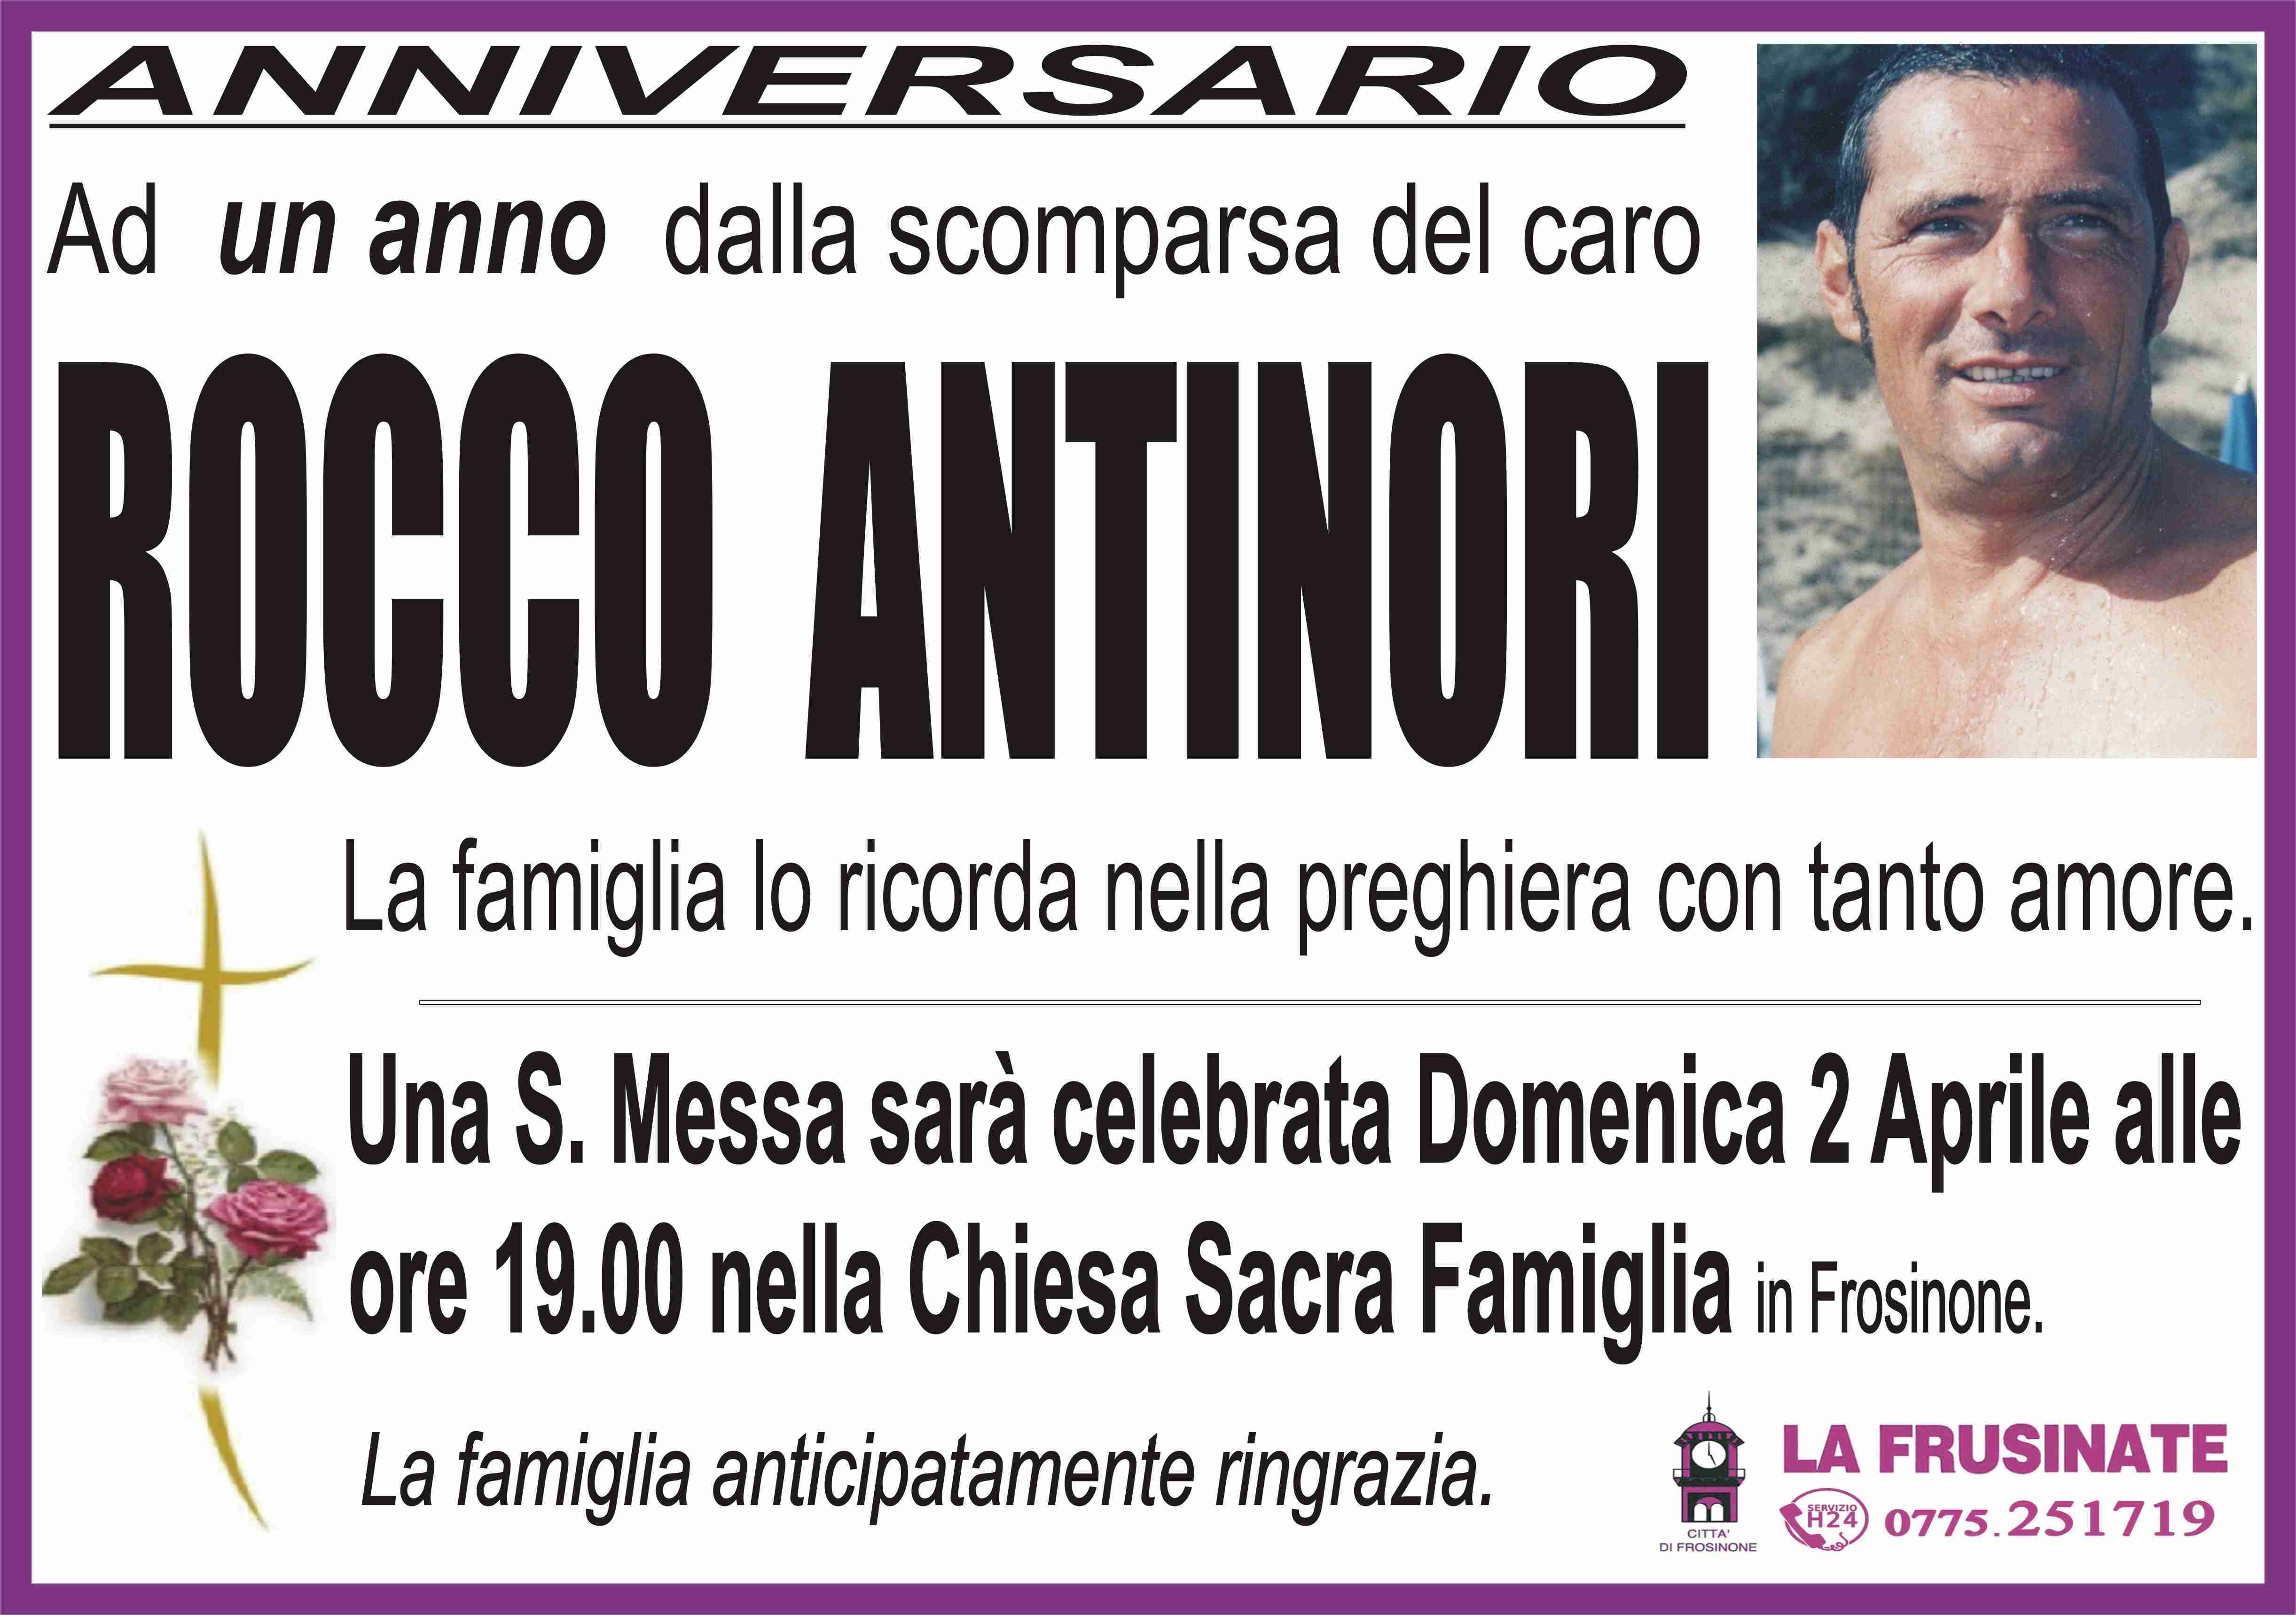 Rocco Antinori